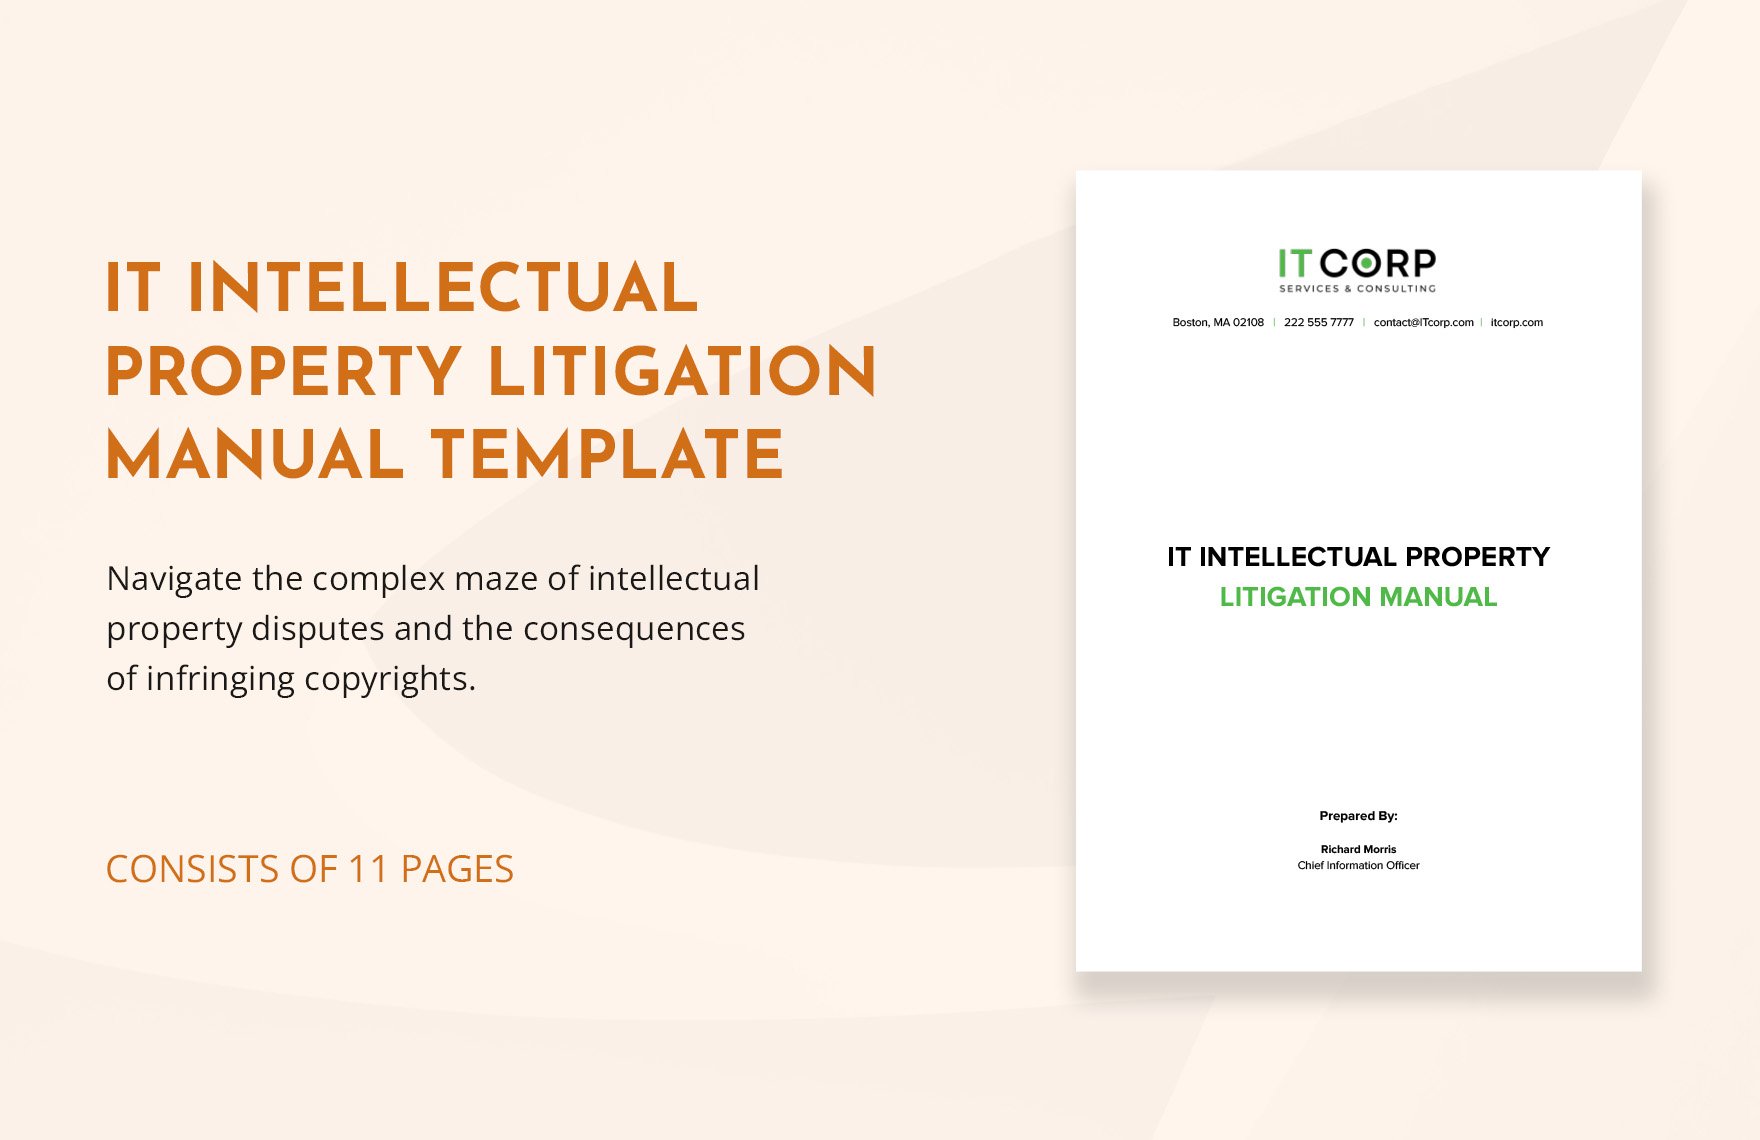 IT Intellectual Property Litigation Manual Template in Word, Google Docs, PDF